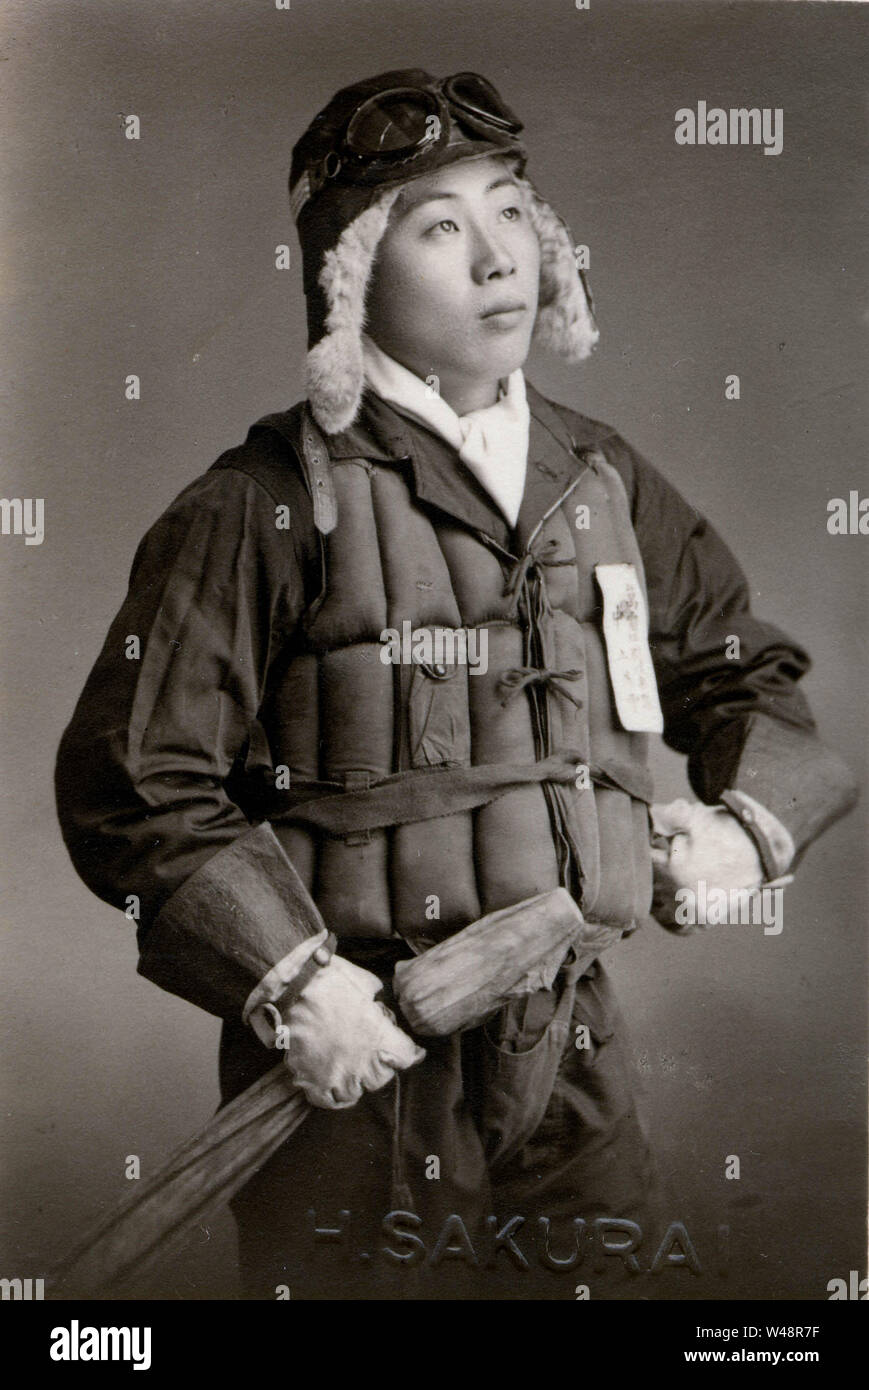 1940s Japan Kamikaze Pilot In Uniform A Member Of The Tokubetsu Kougekitai 特別攻撃隊 Kamikaze Of The Japanese Air Force During Wwii th Century Vintage Gelatin Silver Print Stock